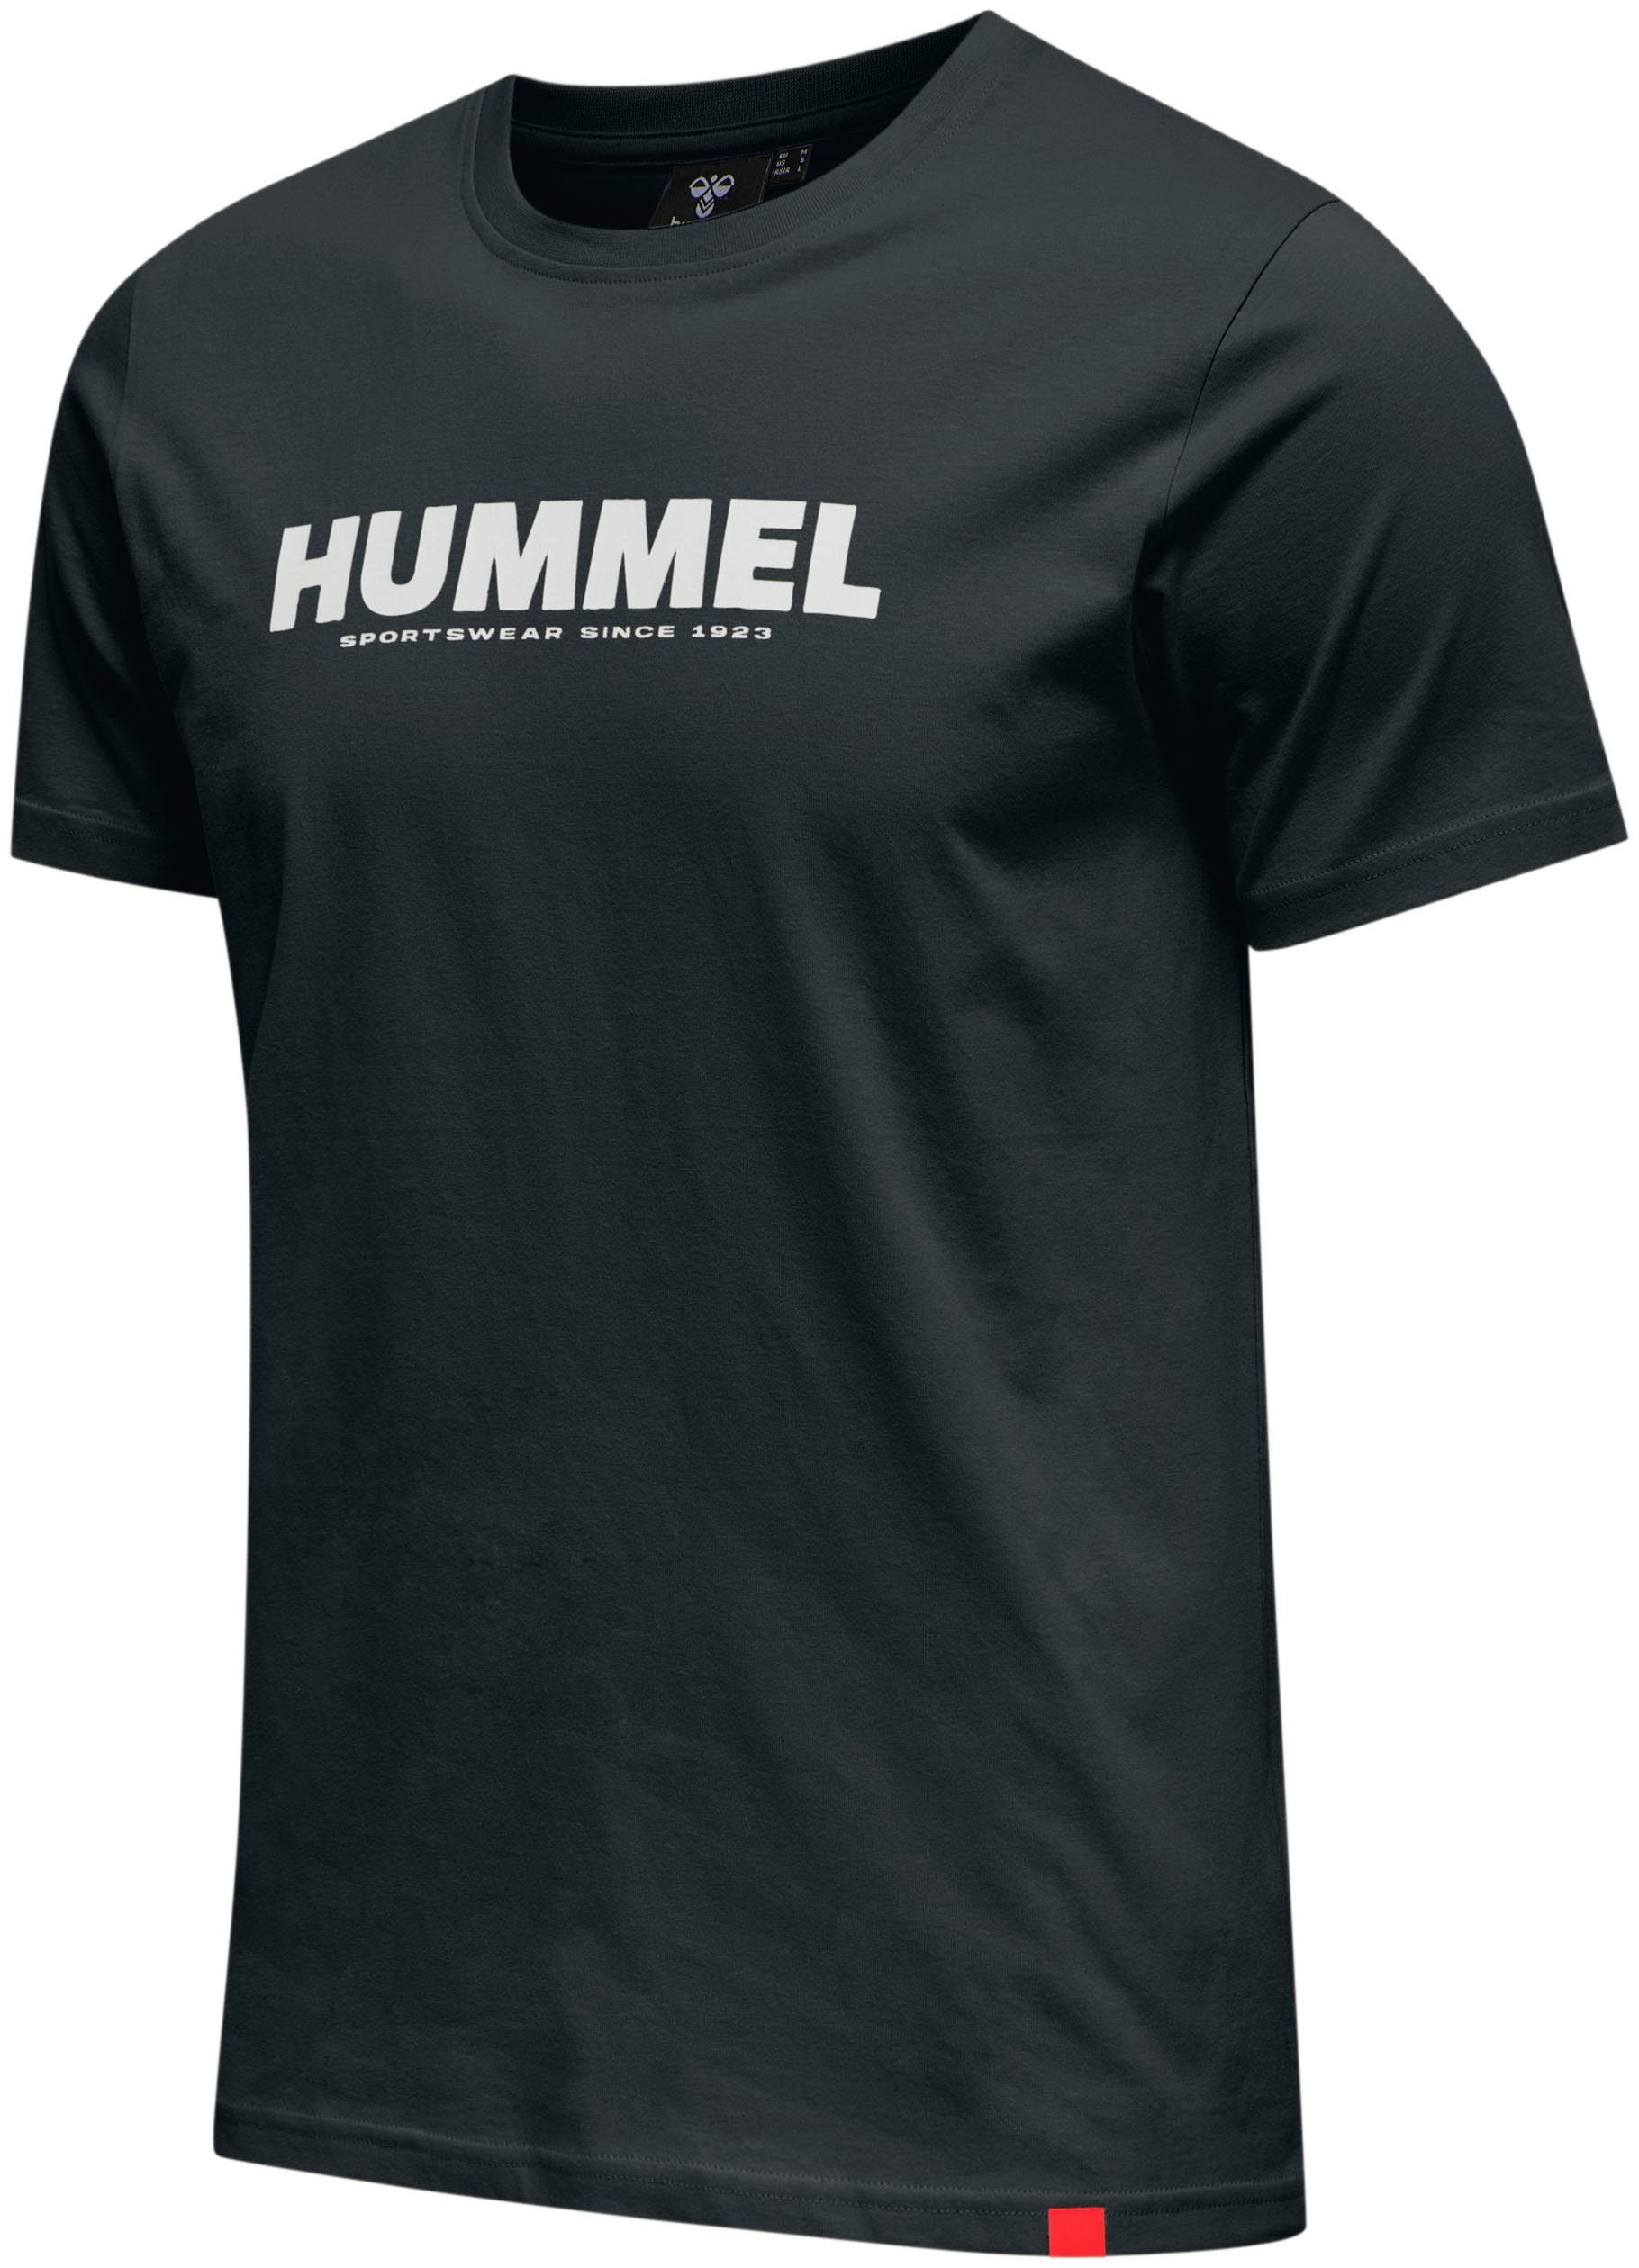 schwarz mit hummel Logo Print T-Shirt